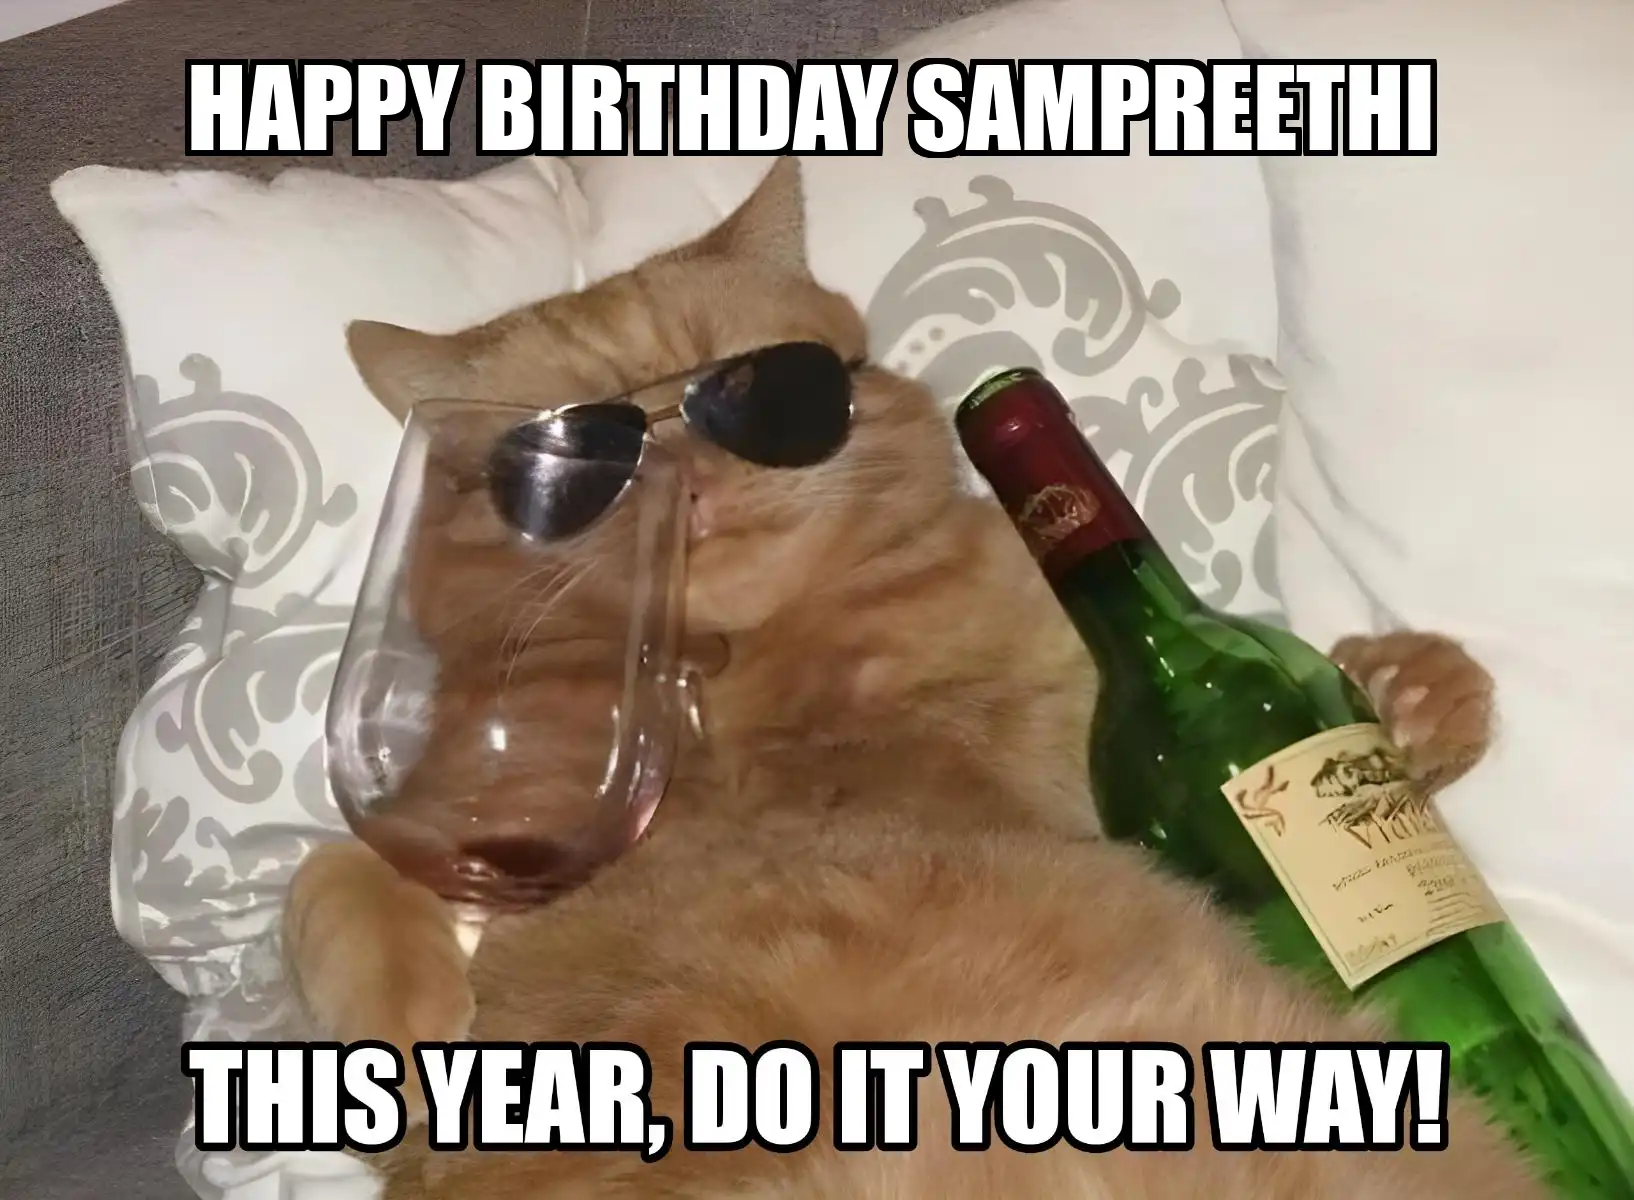 Happy Birthday Sampreethi This Year Do It Your Way Meme